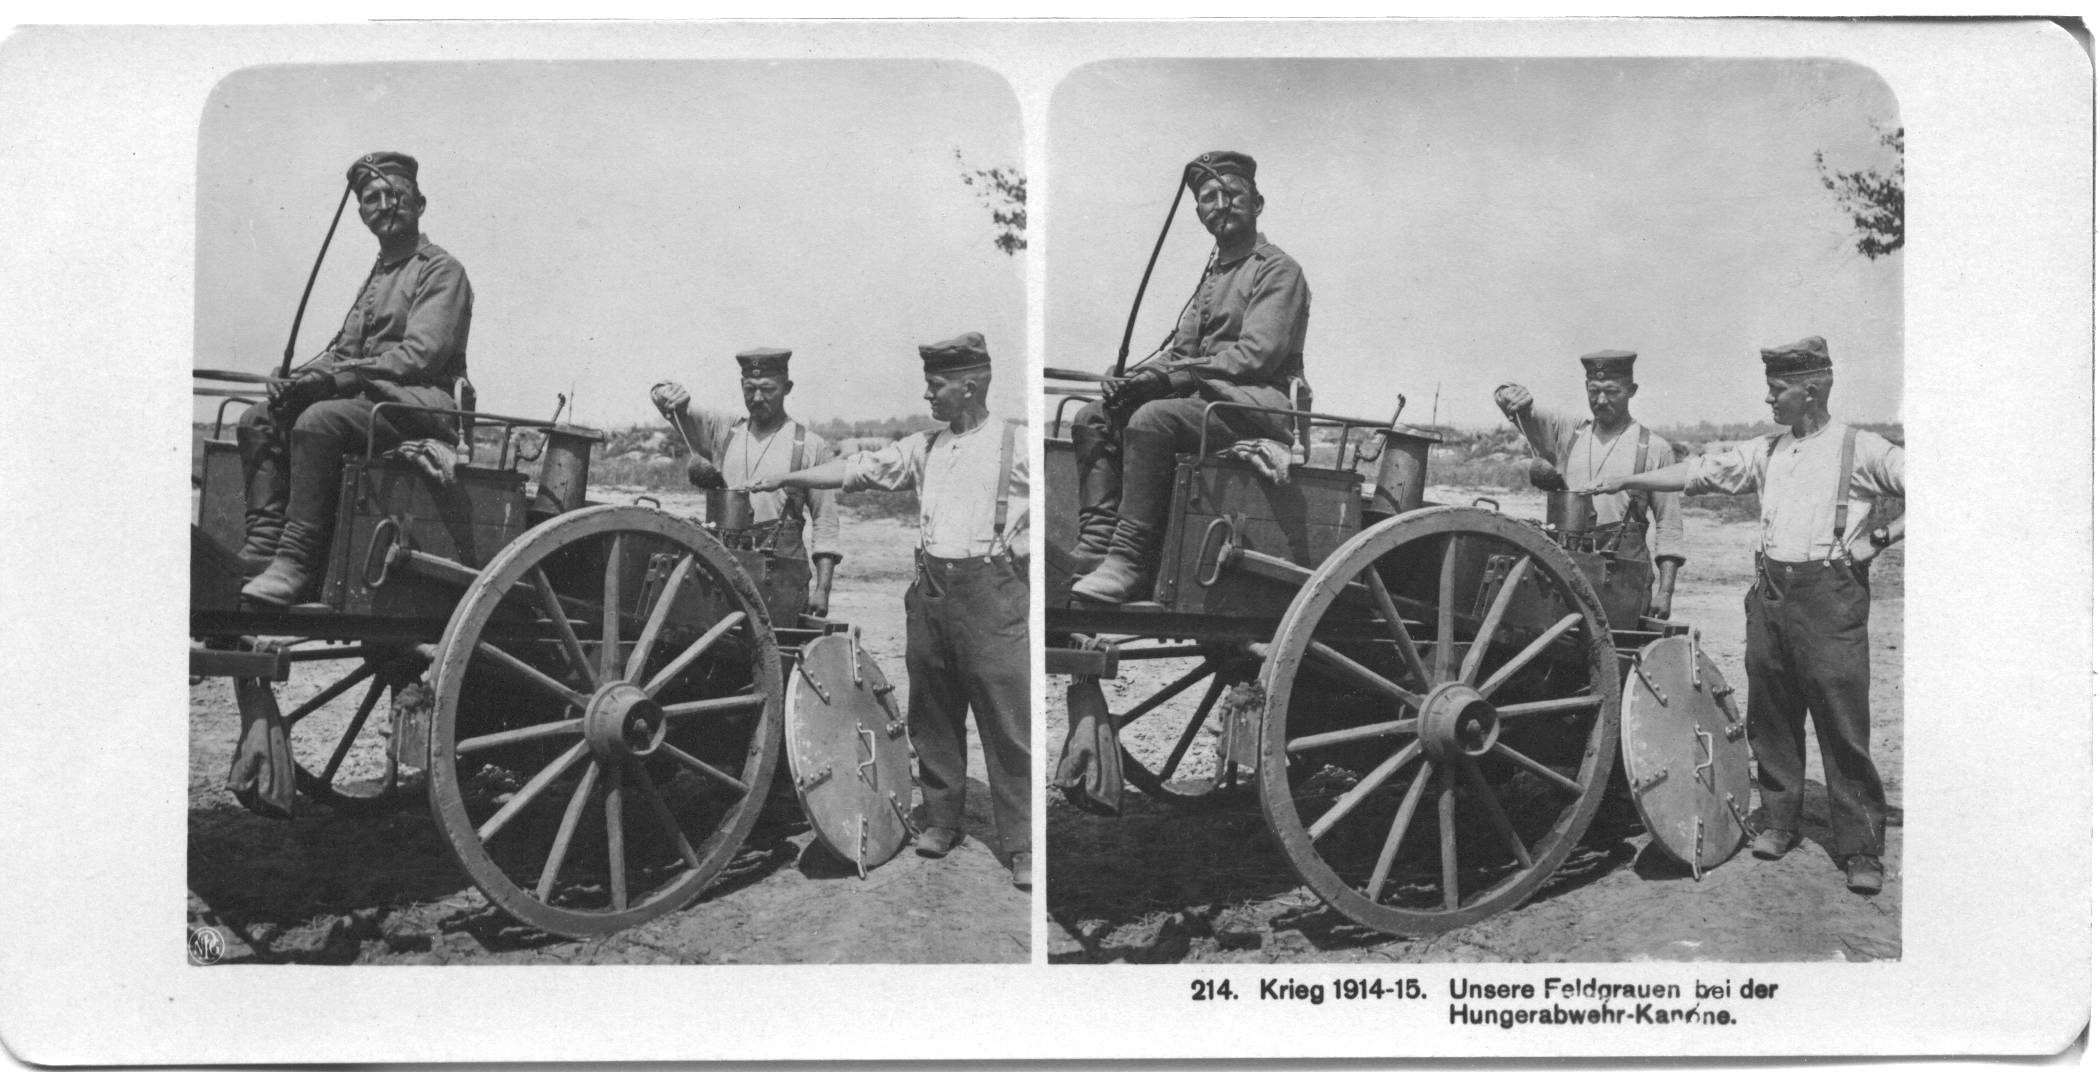 "Unsere Feldgrauen bei der Hungerabwehr-Kanone" - Our field gray by the hunger defense cannon